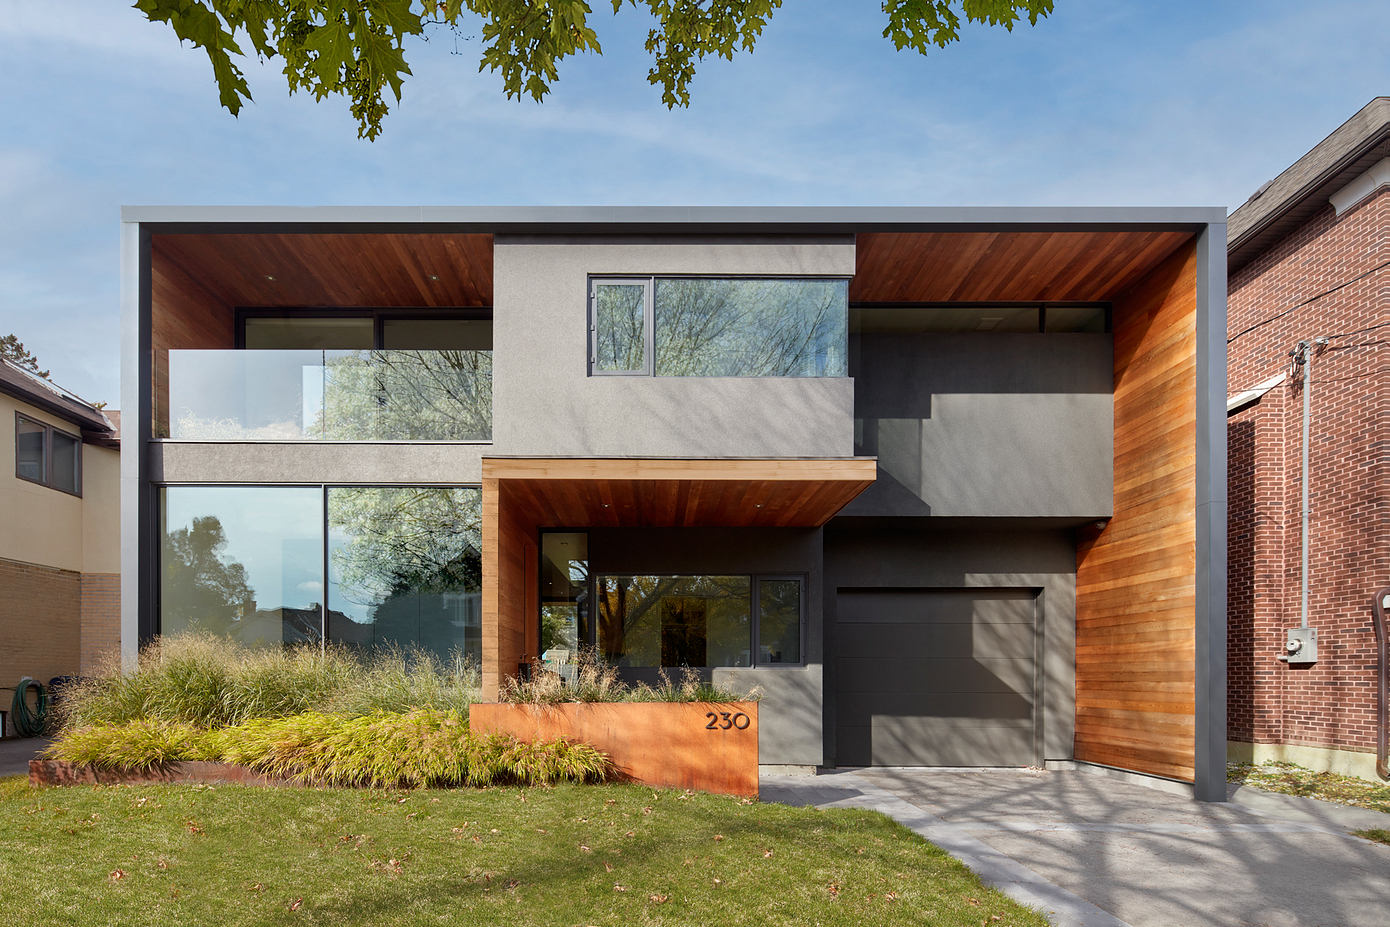 Shift House: Striking Modernist Design in Toronto, Canada